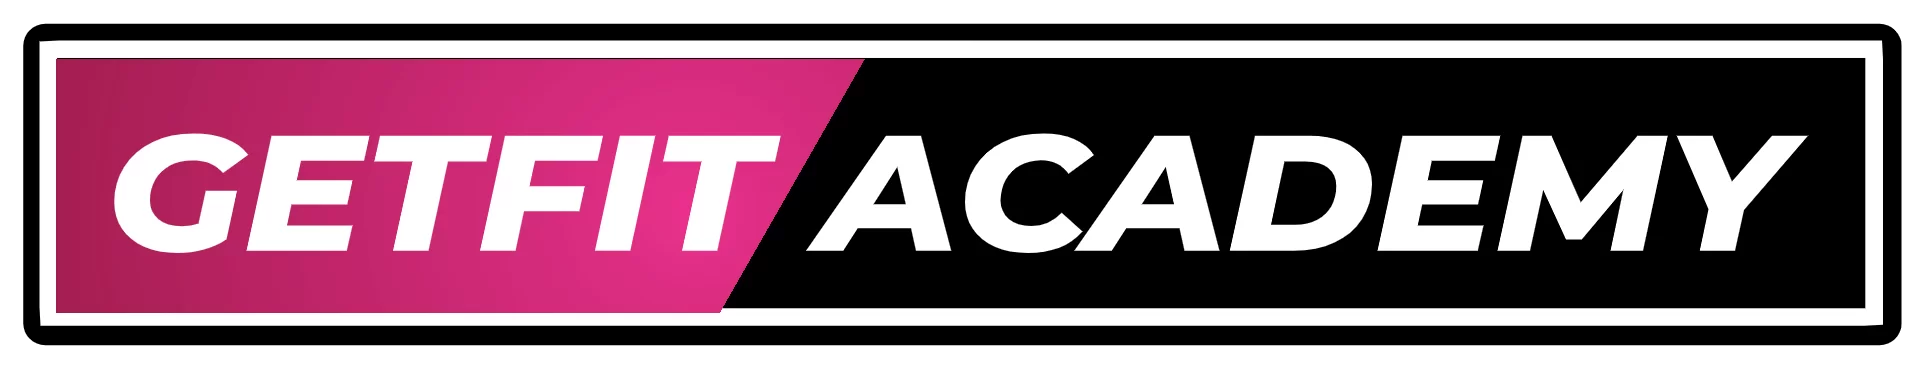 Get Fit Academy logo